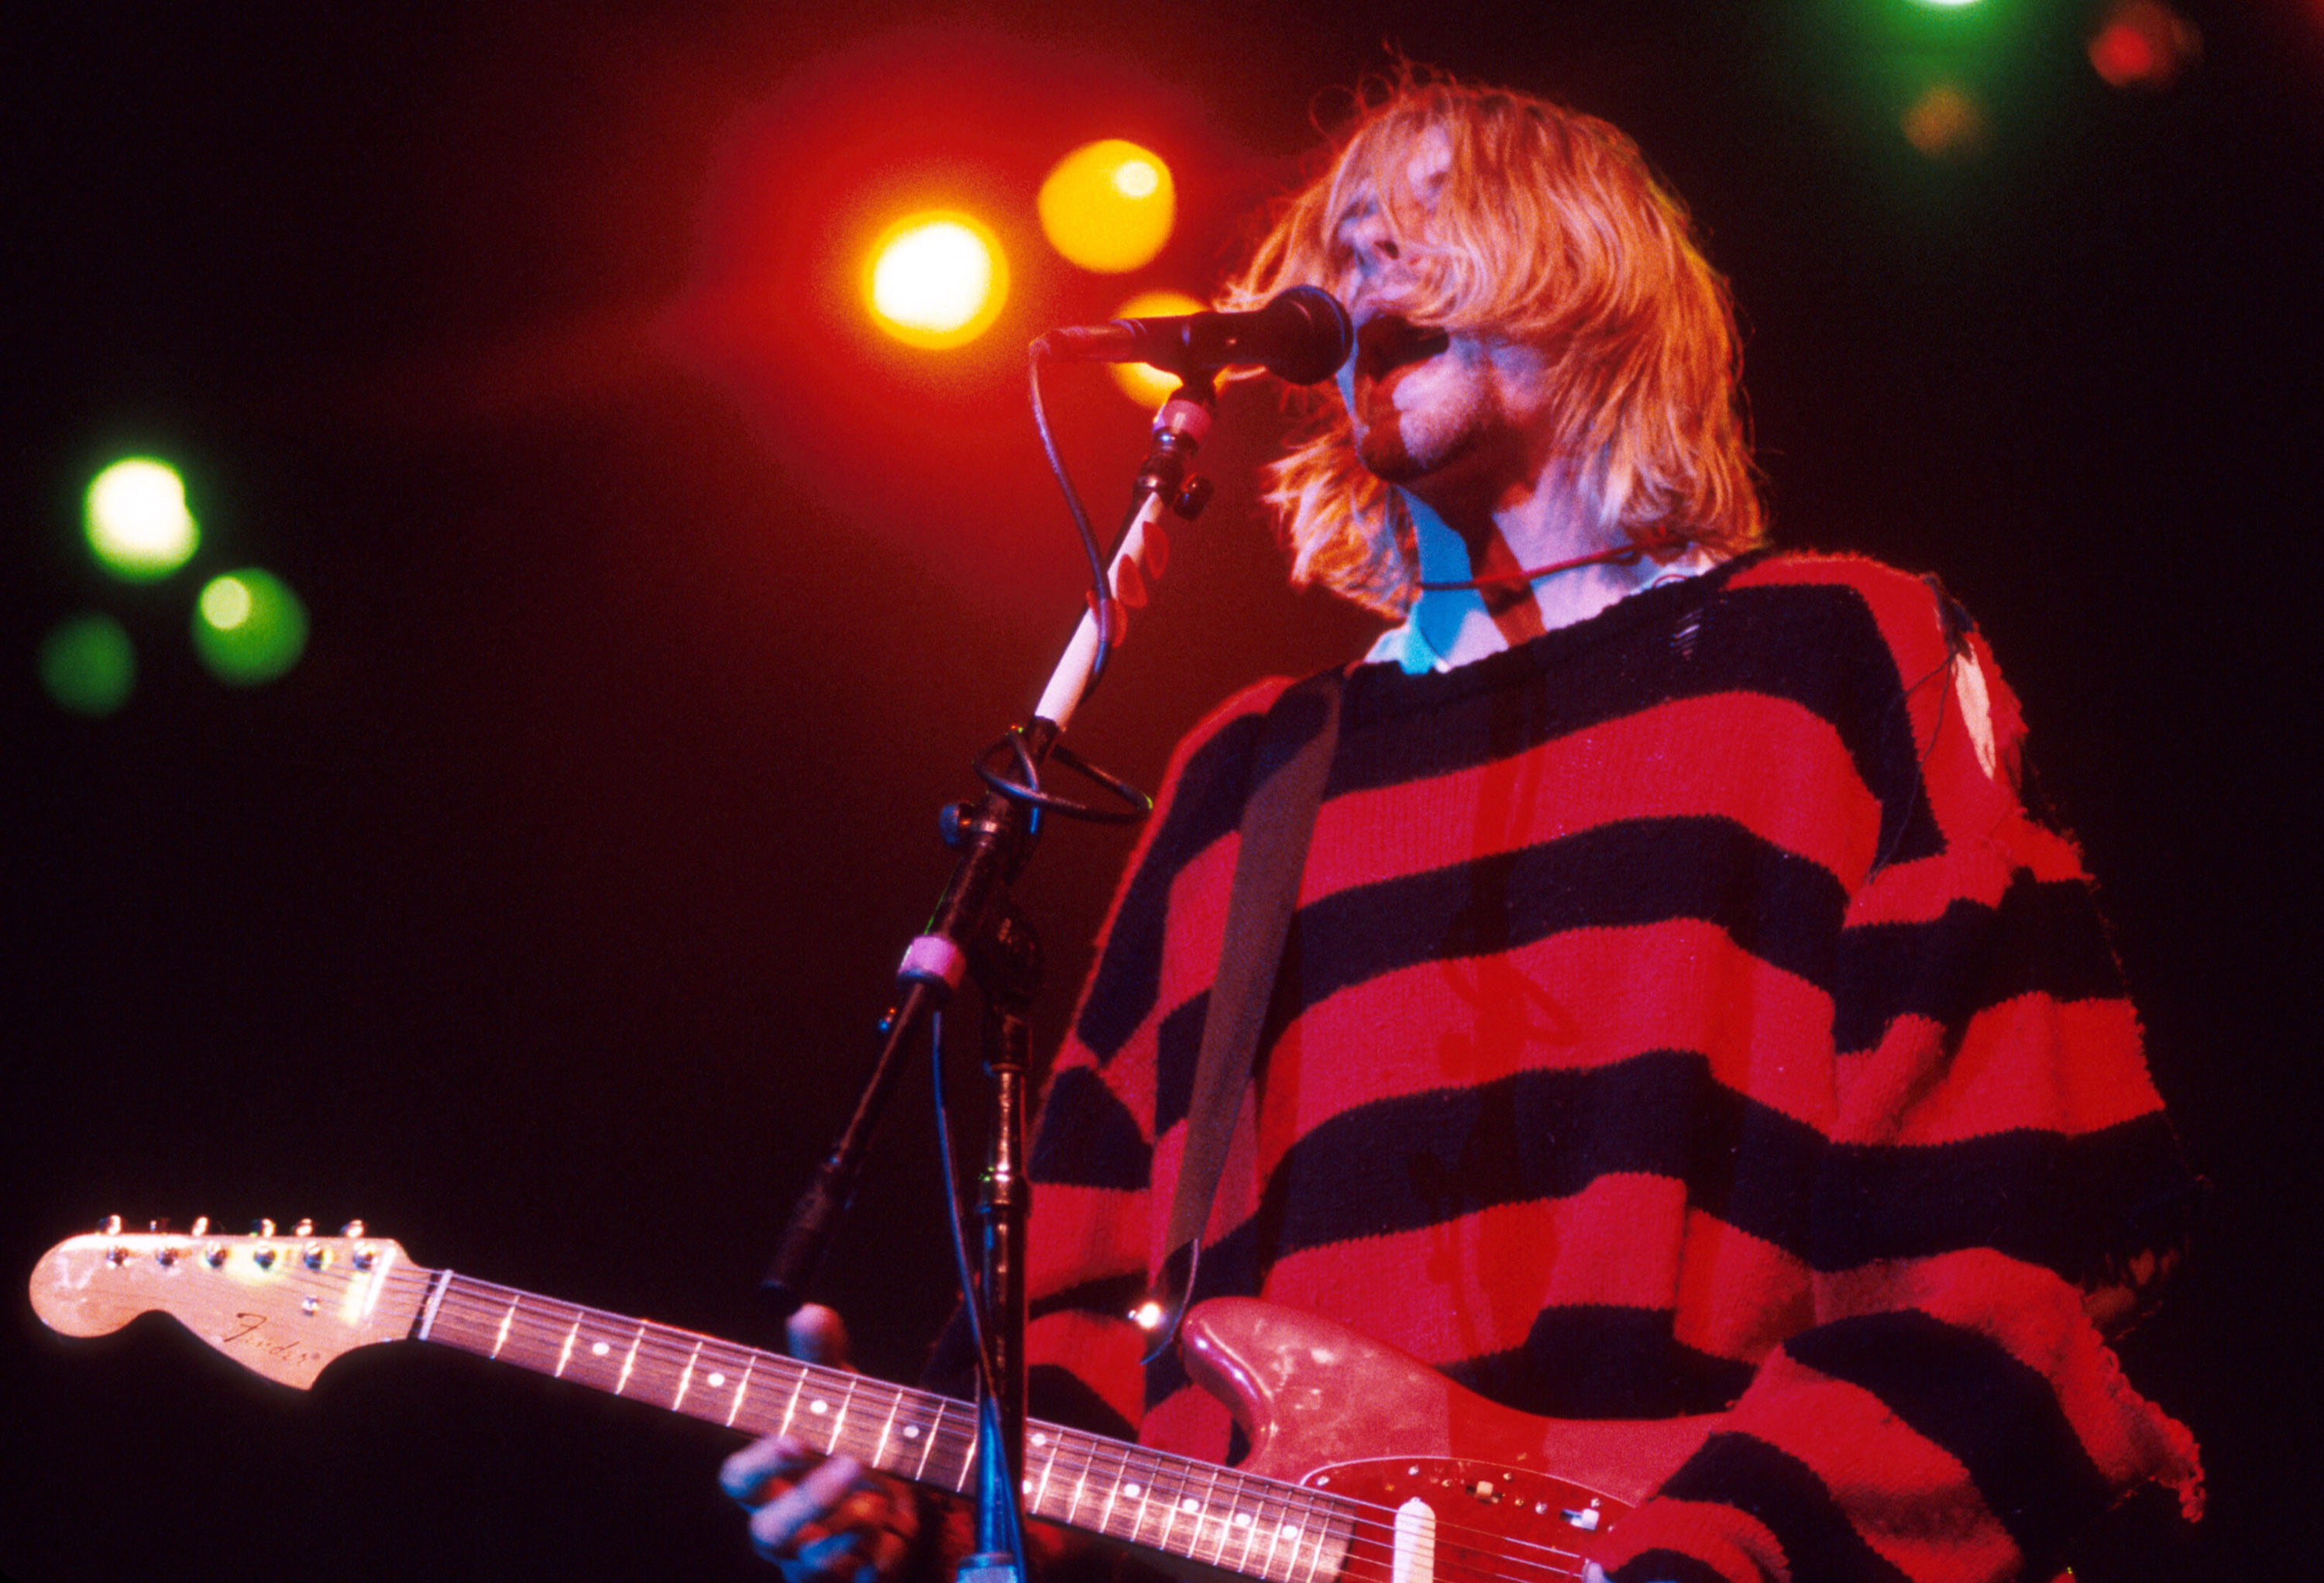 Nirvana's Kurt Cobain sings and plays guitar on stage